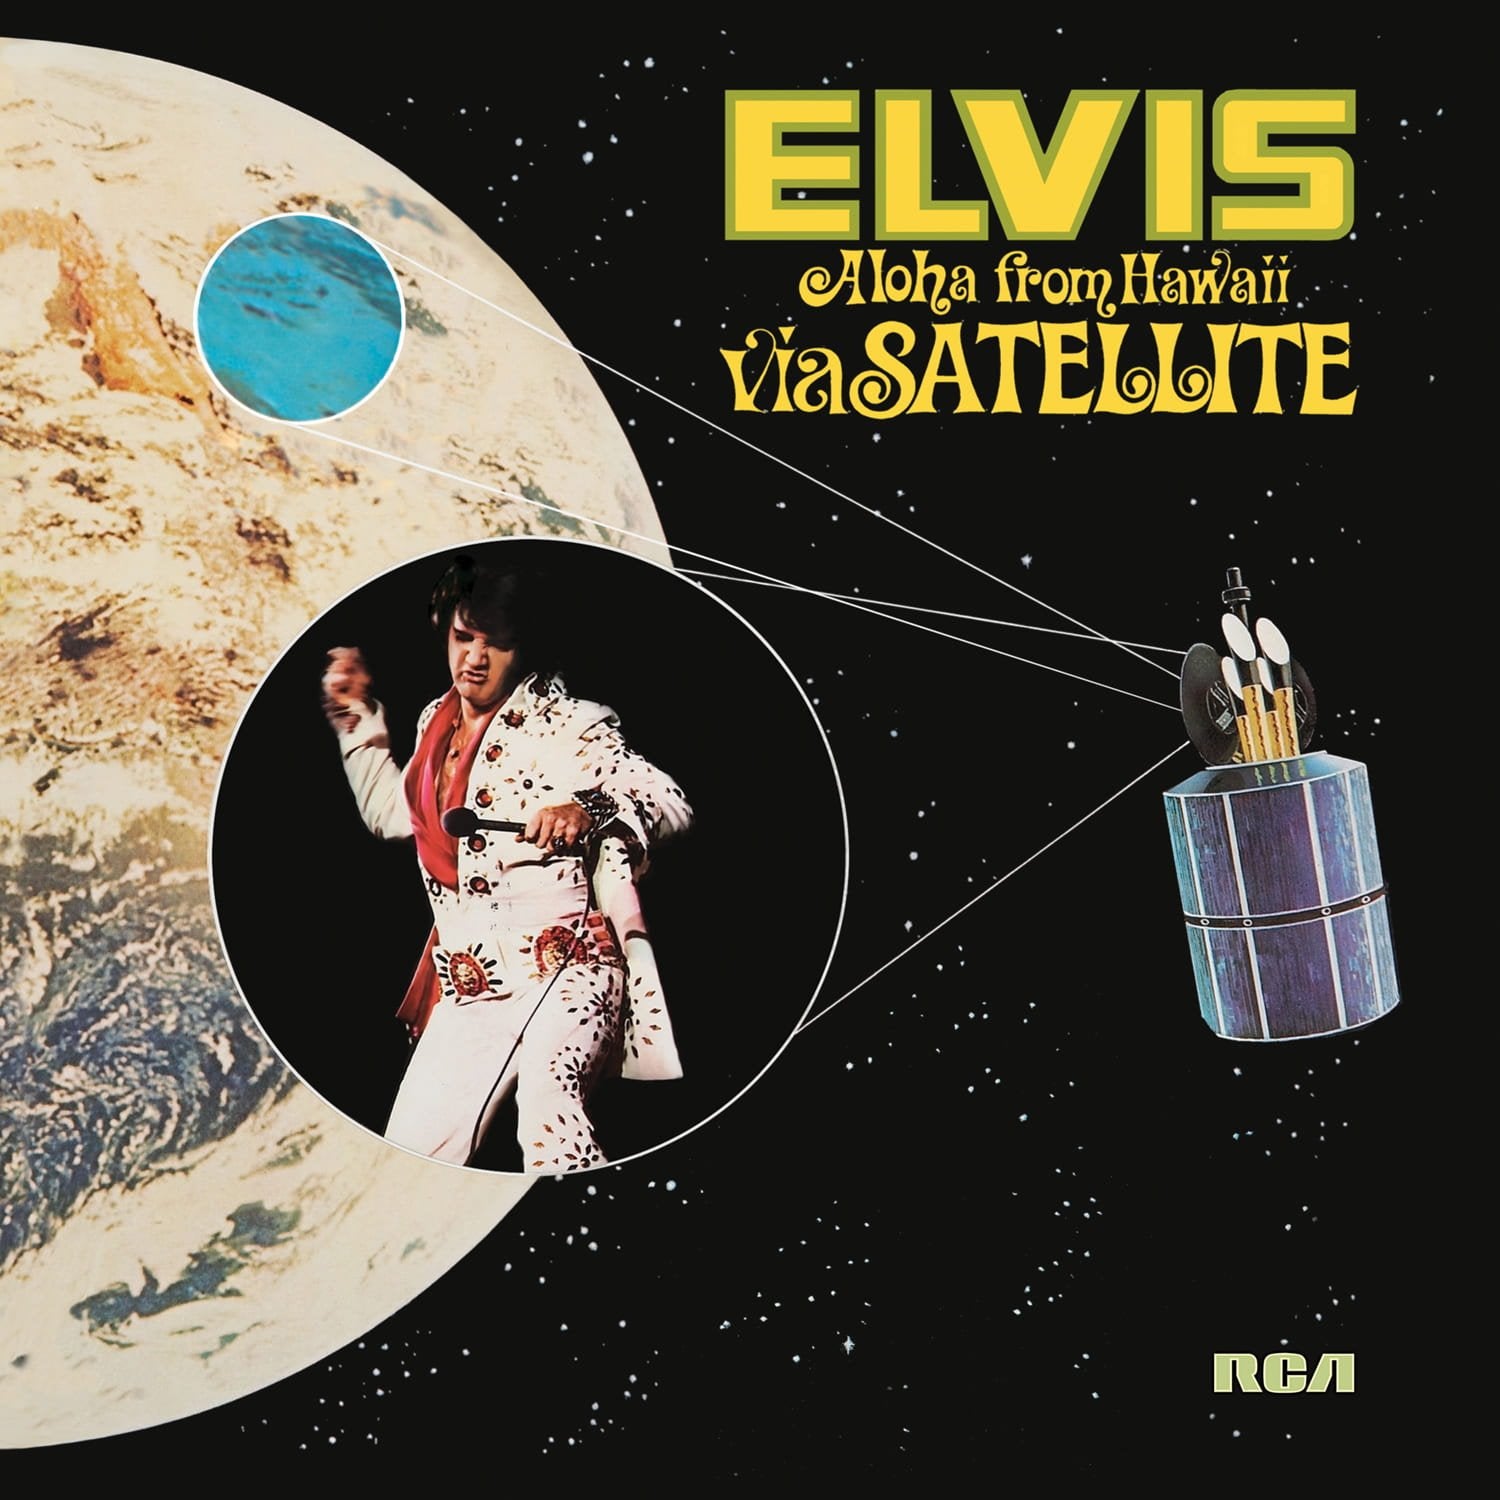 Presley, Elvis "Aloha from Hawaii via Satellite" [50th Anniversary] 2LP